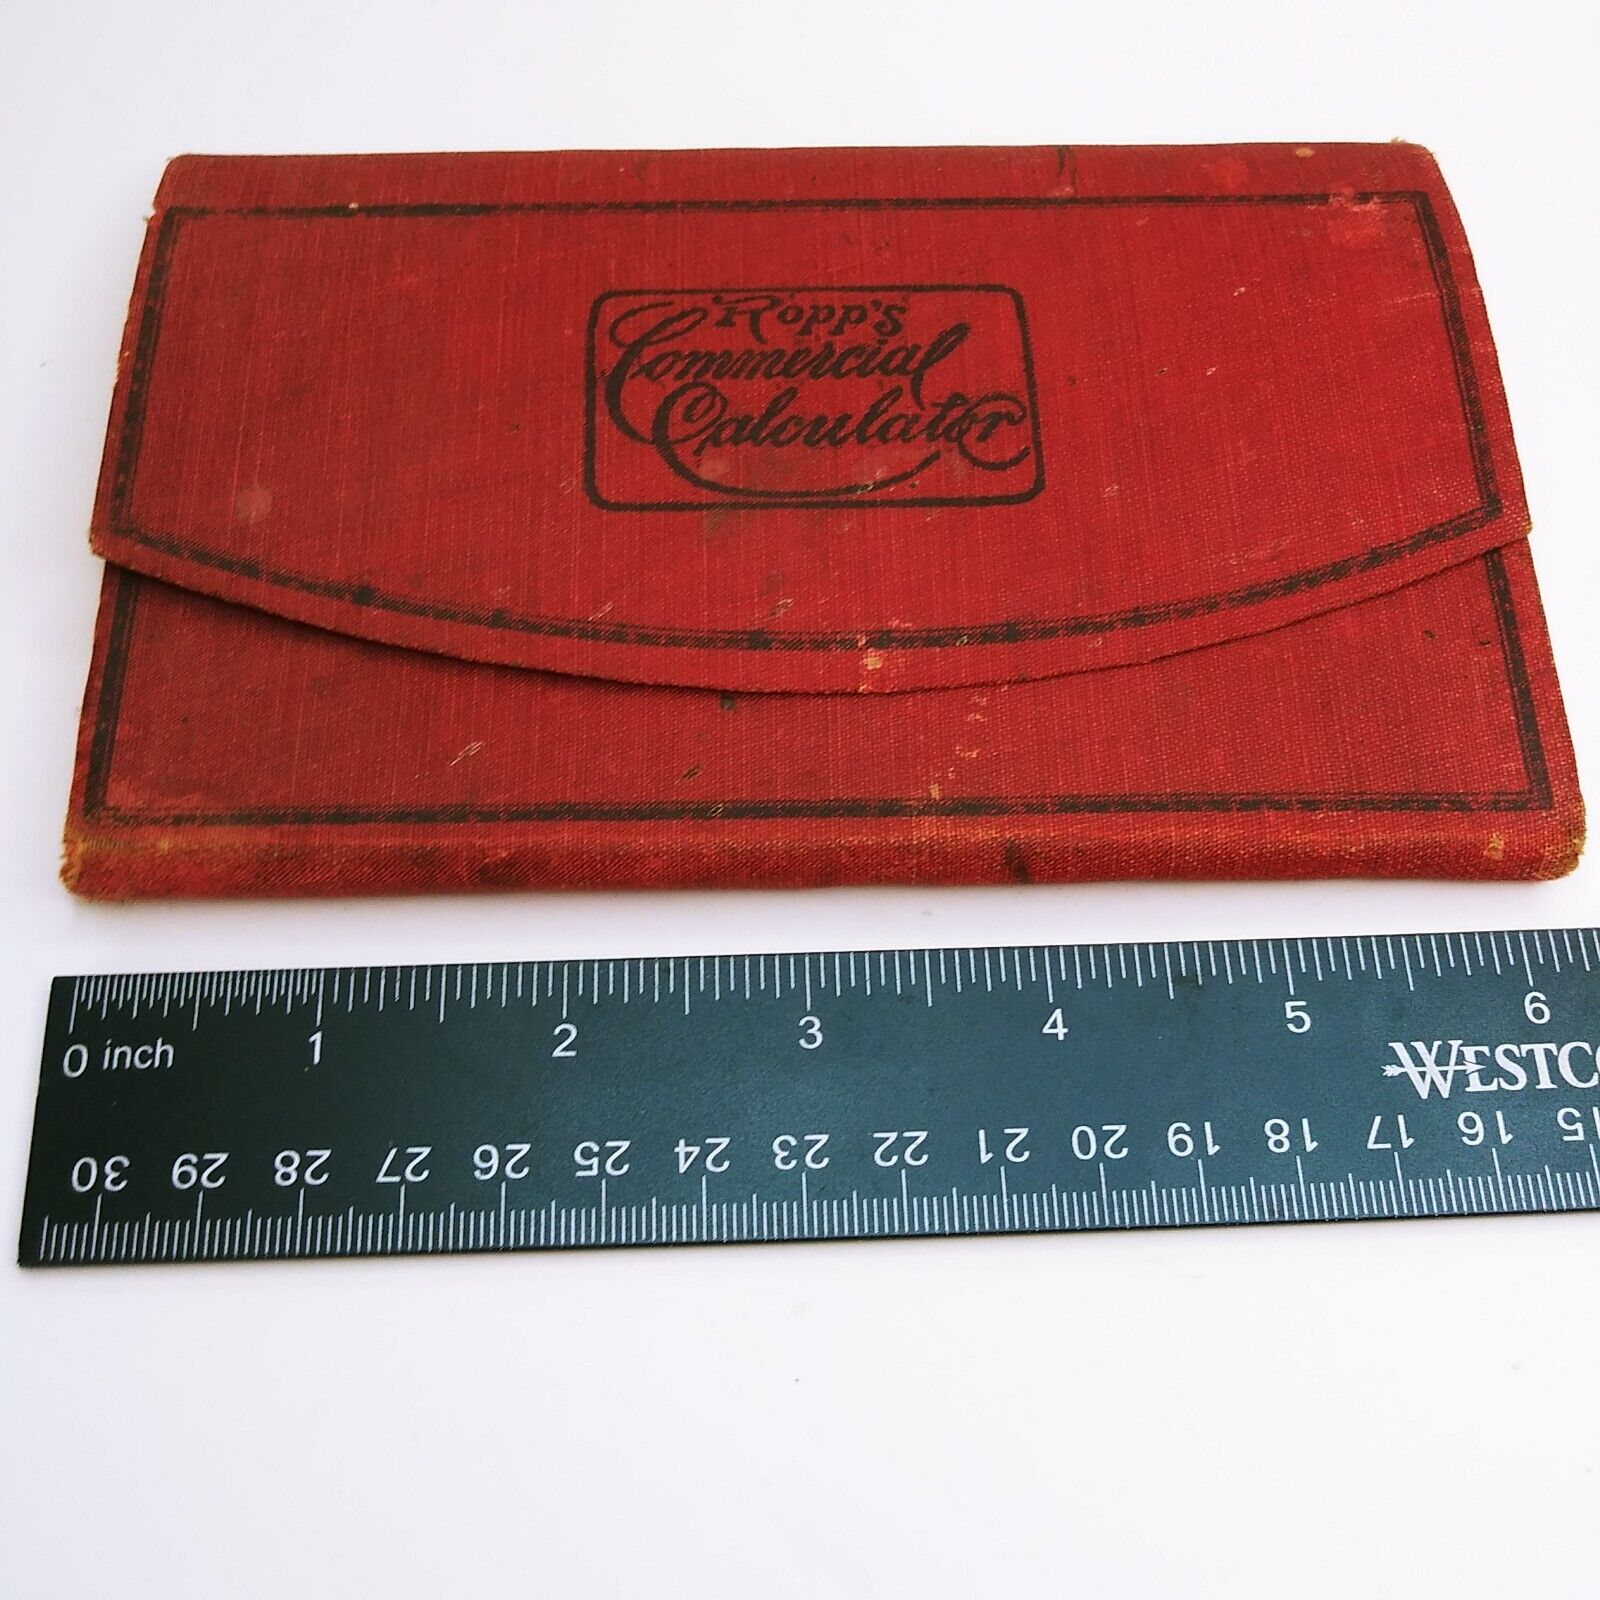 Antique 1906 Ropp's New Commercial Calculator & Short Cut Arithmetic BOOK - READ